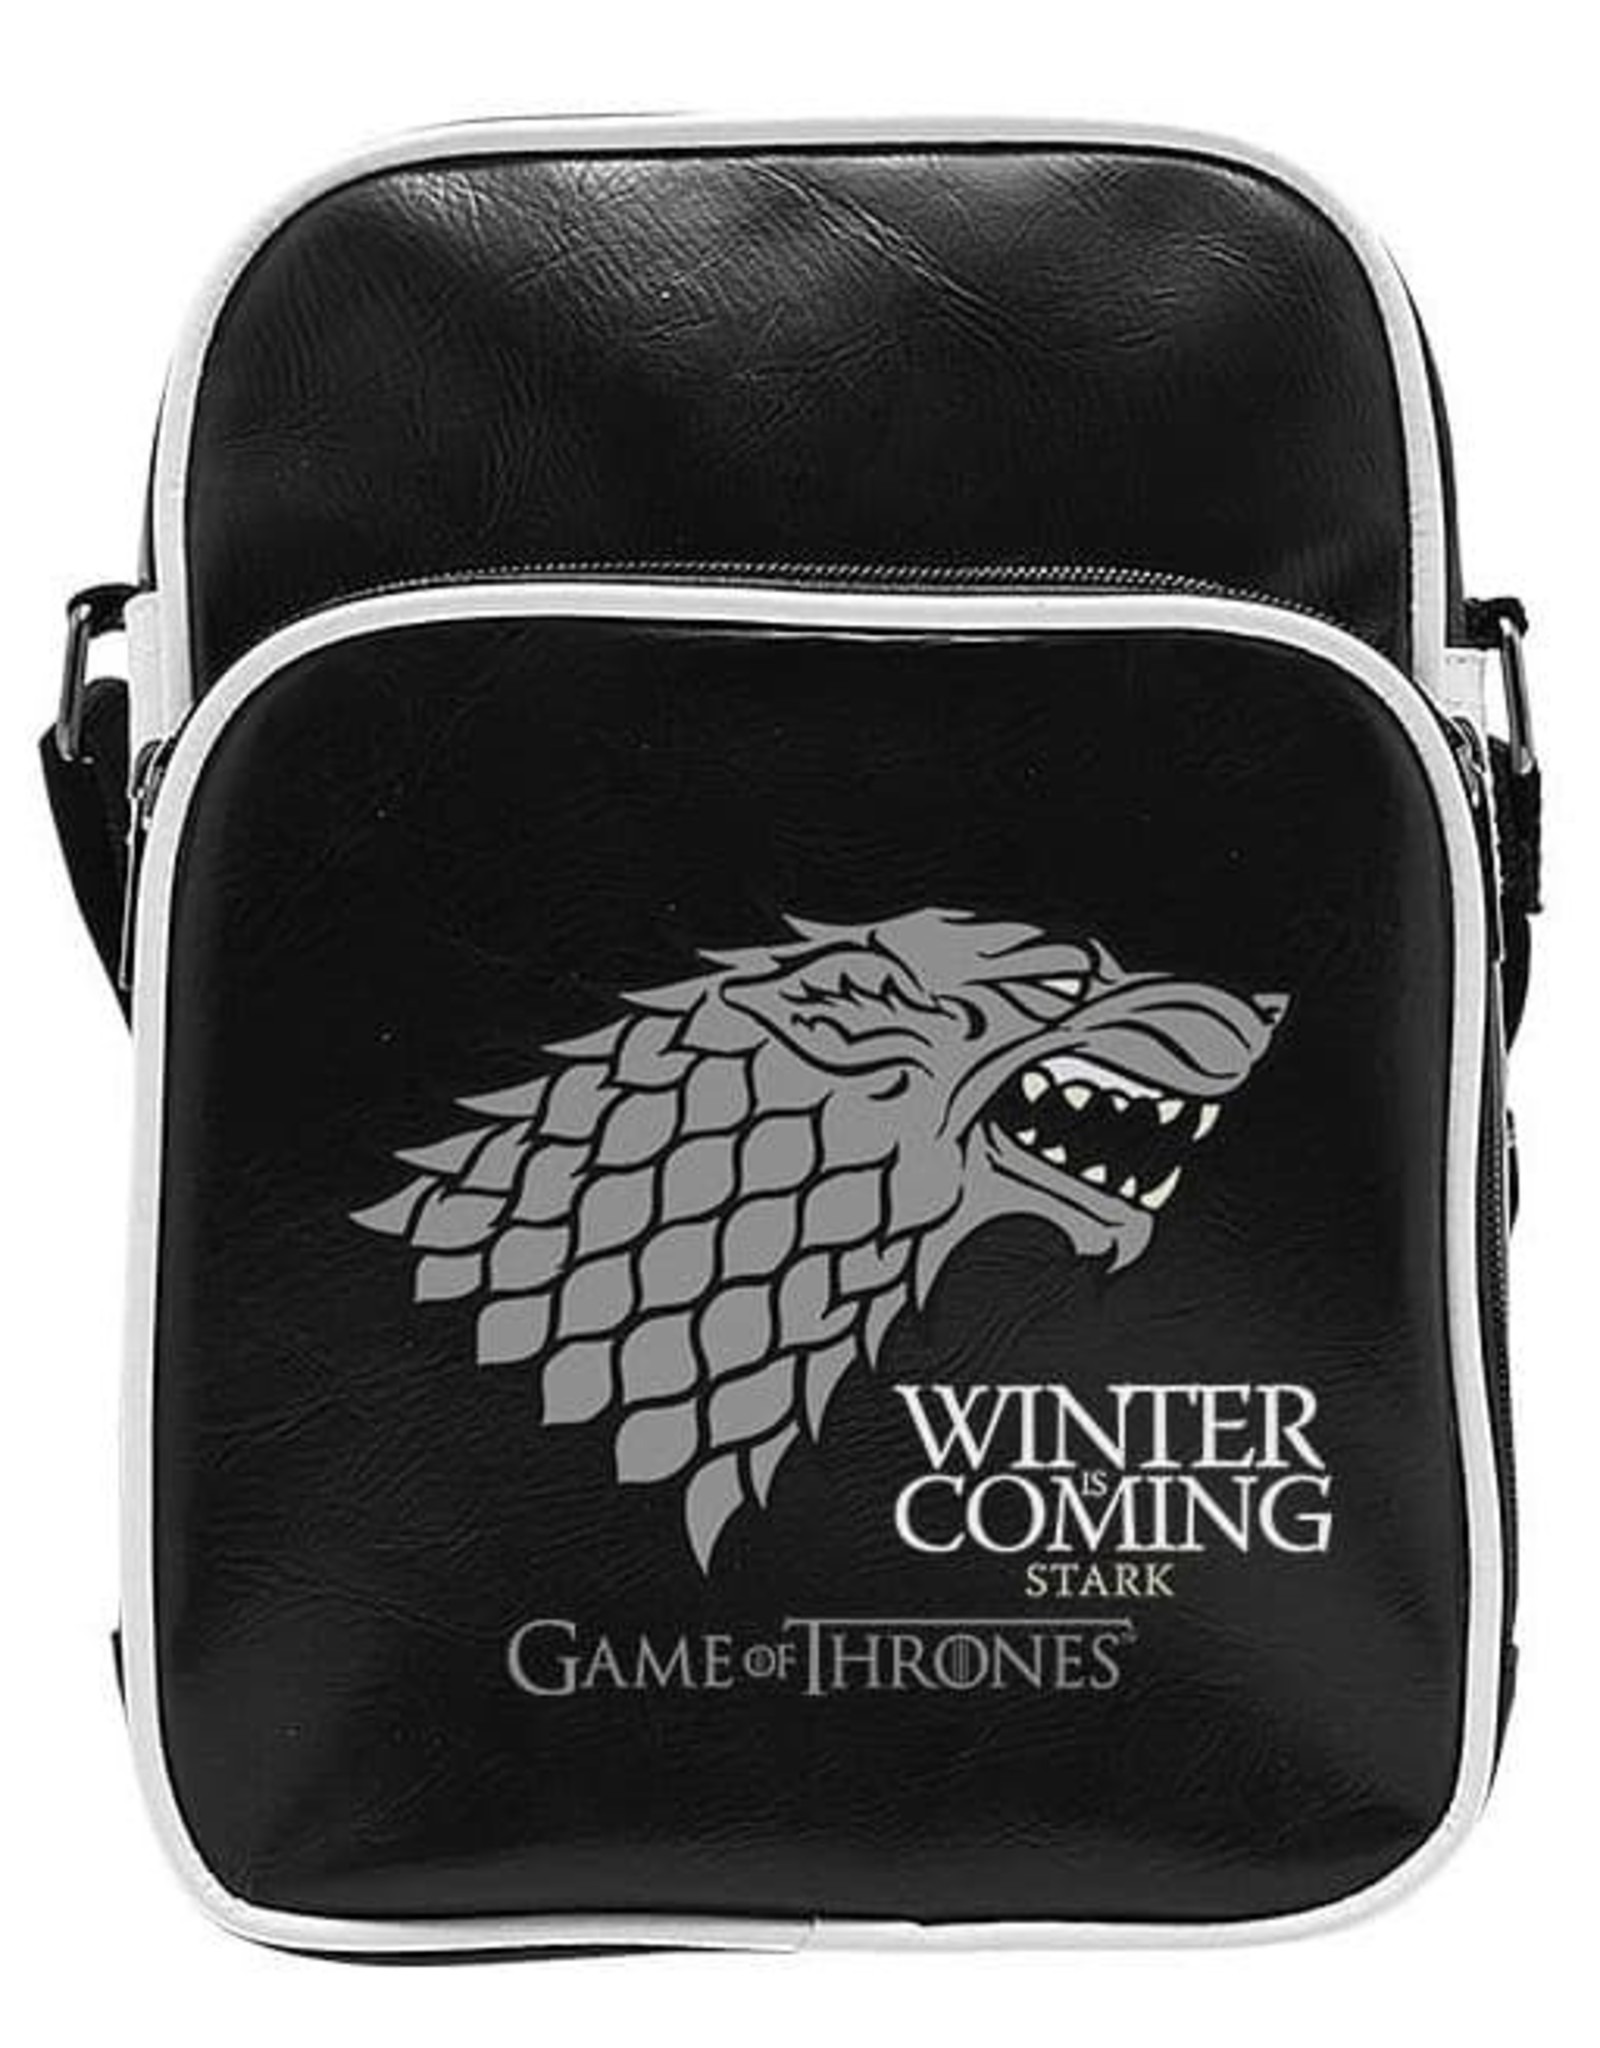 Game of Thrones Merchandise bags - Game of Thrones Stark Shoulder bag